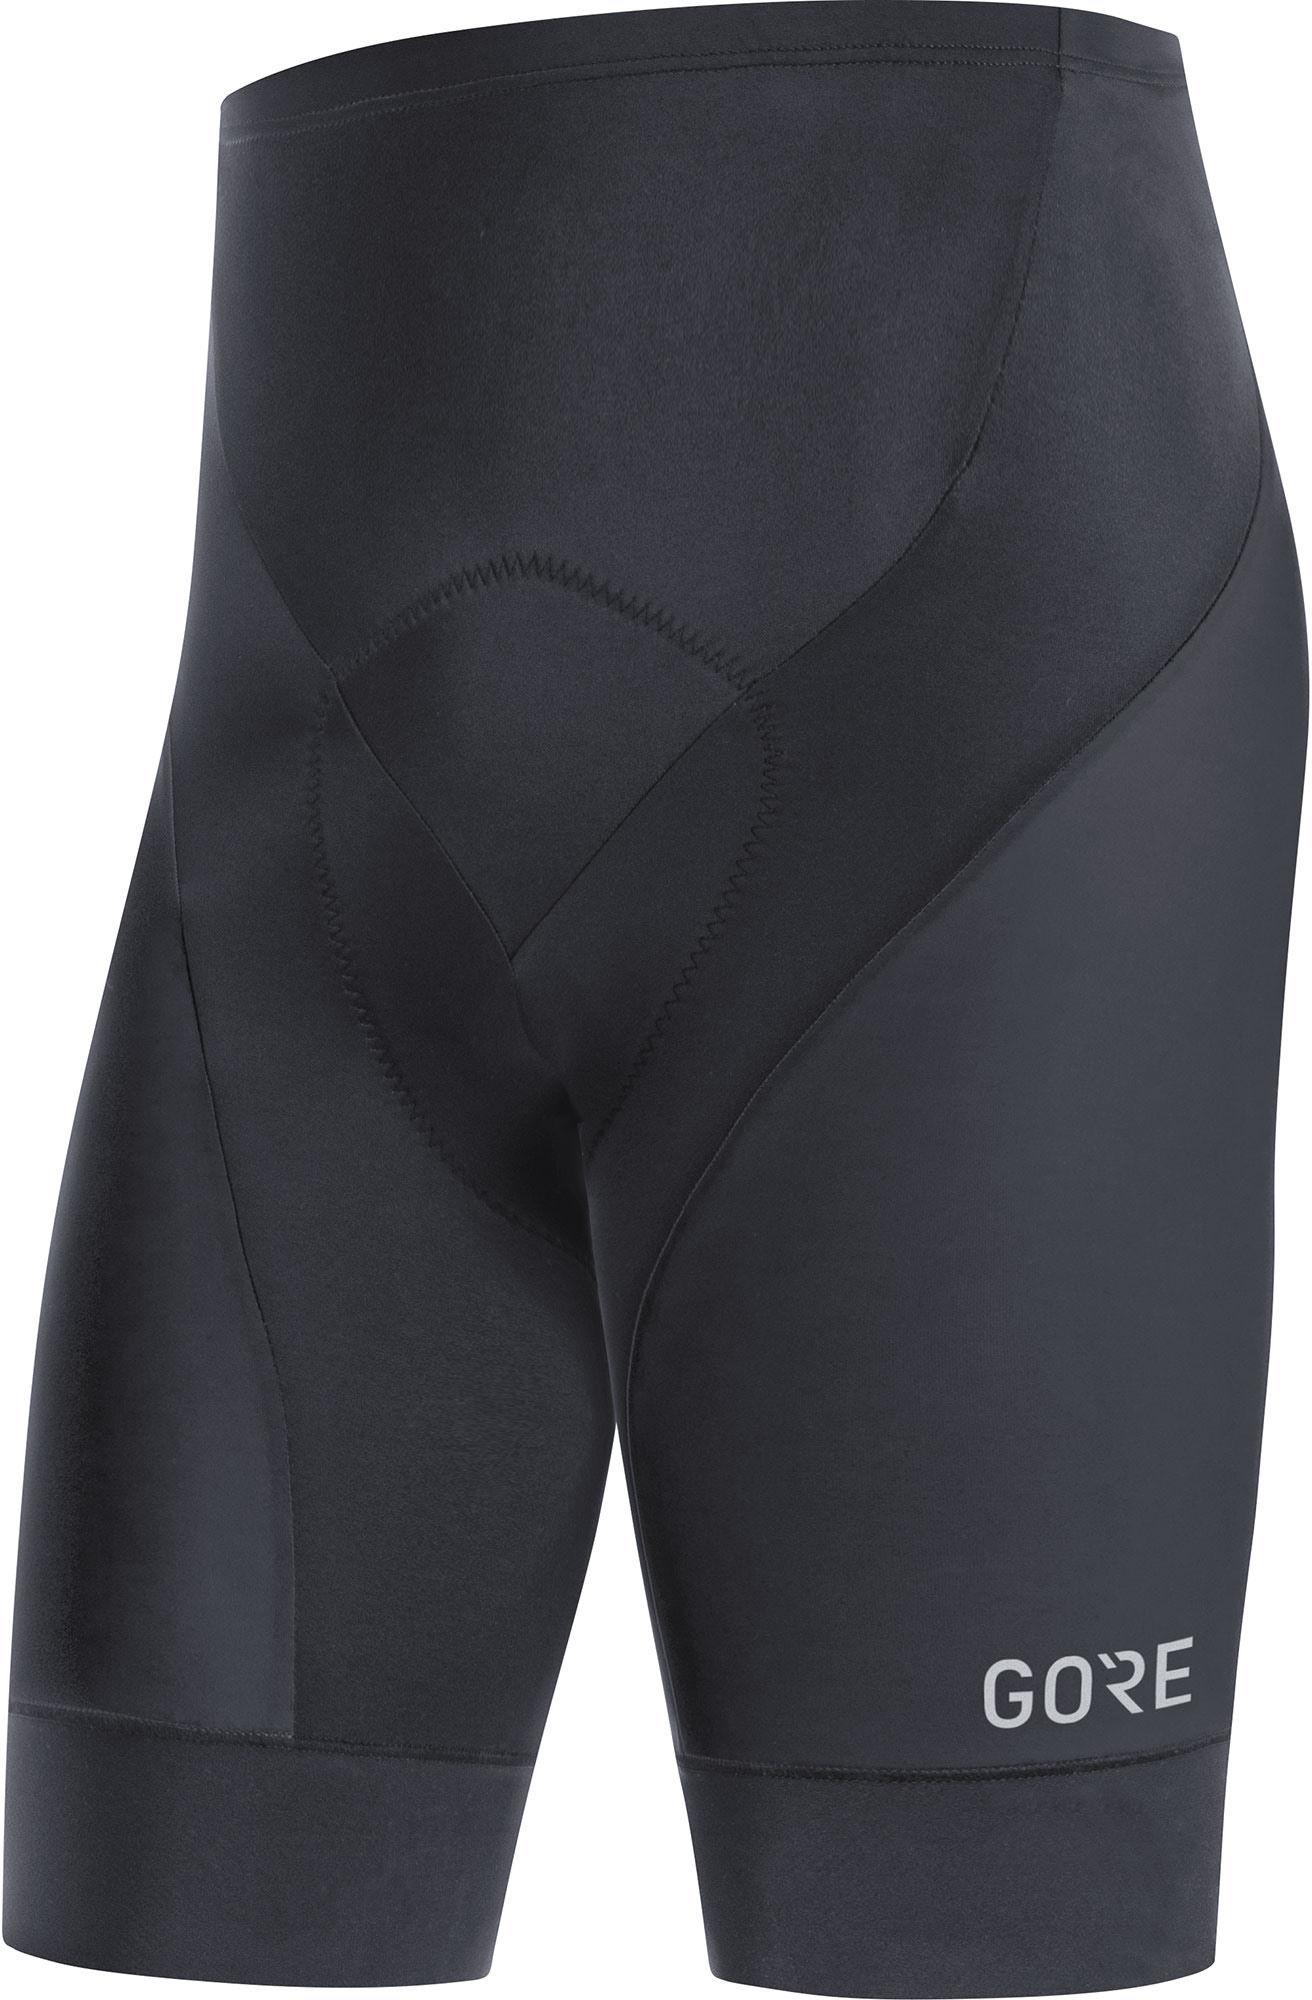 Gorewear C3 Cycle Short Tights Plus - Black